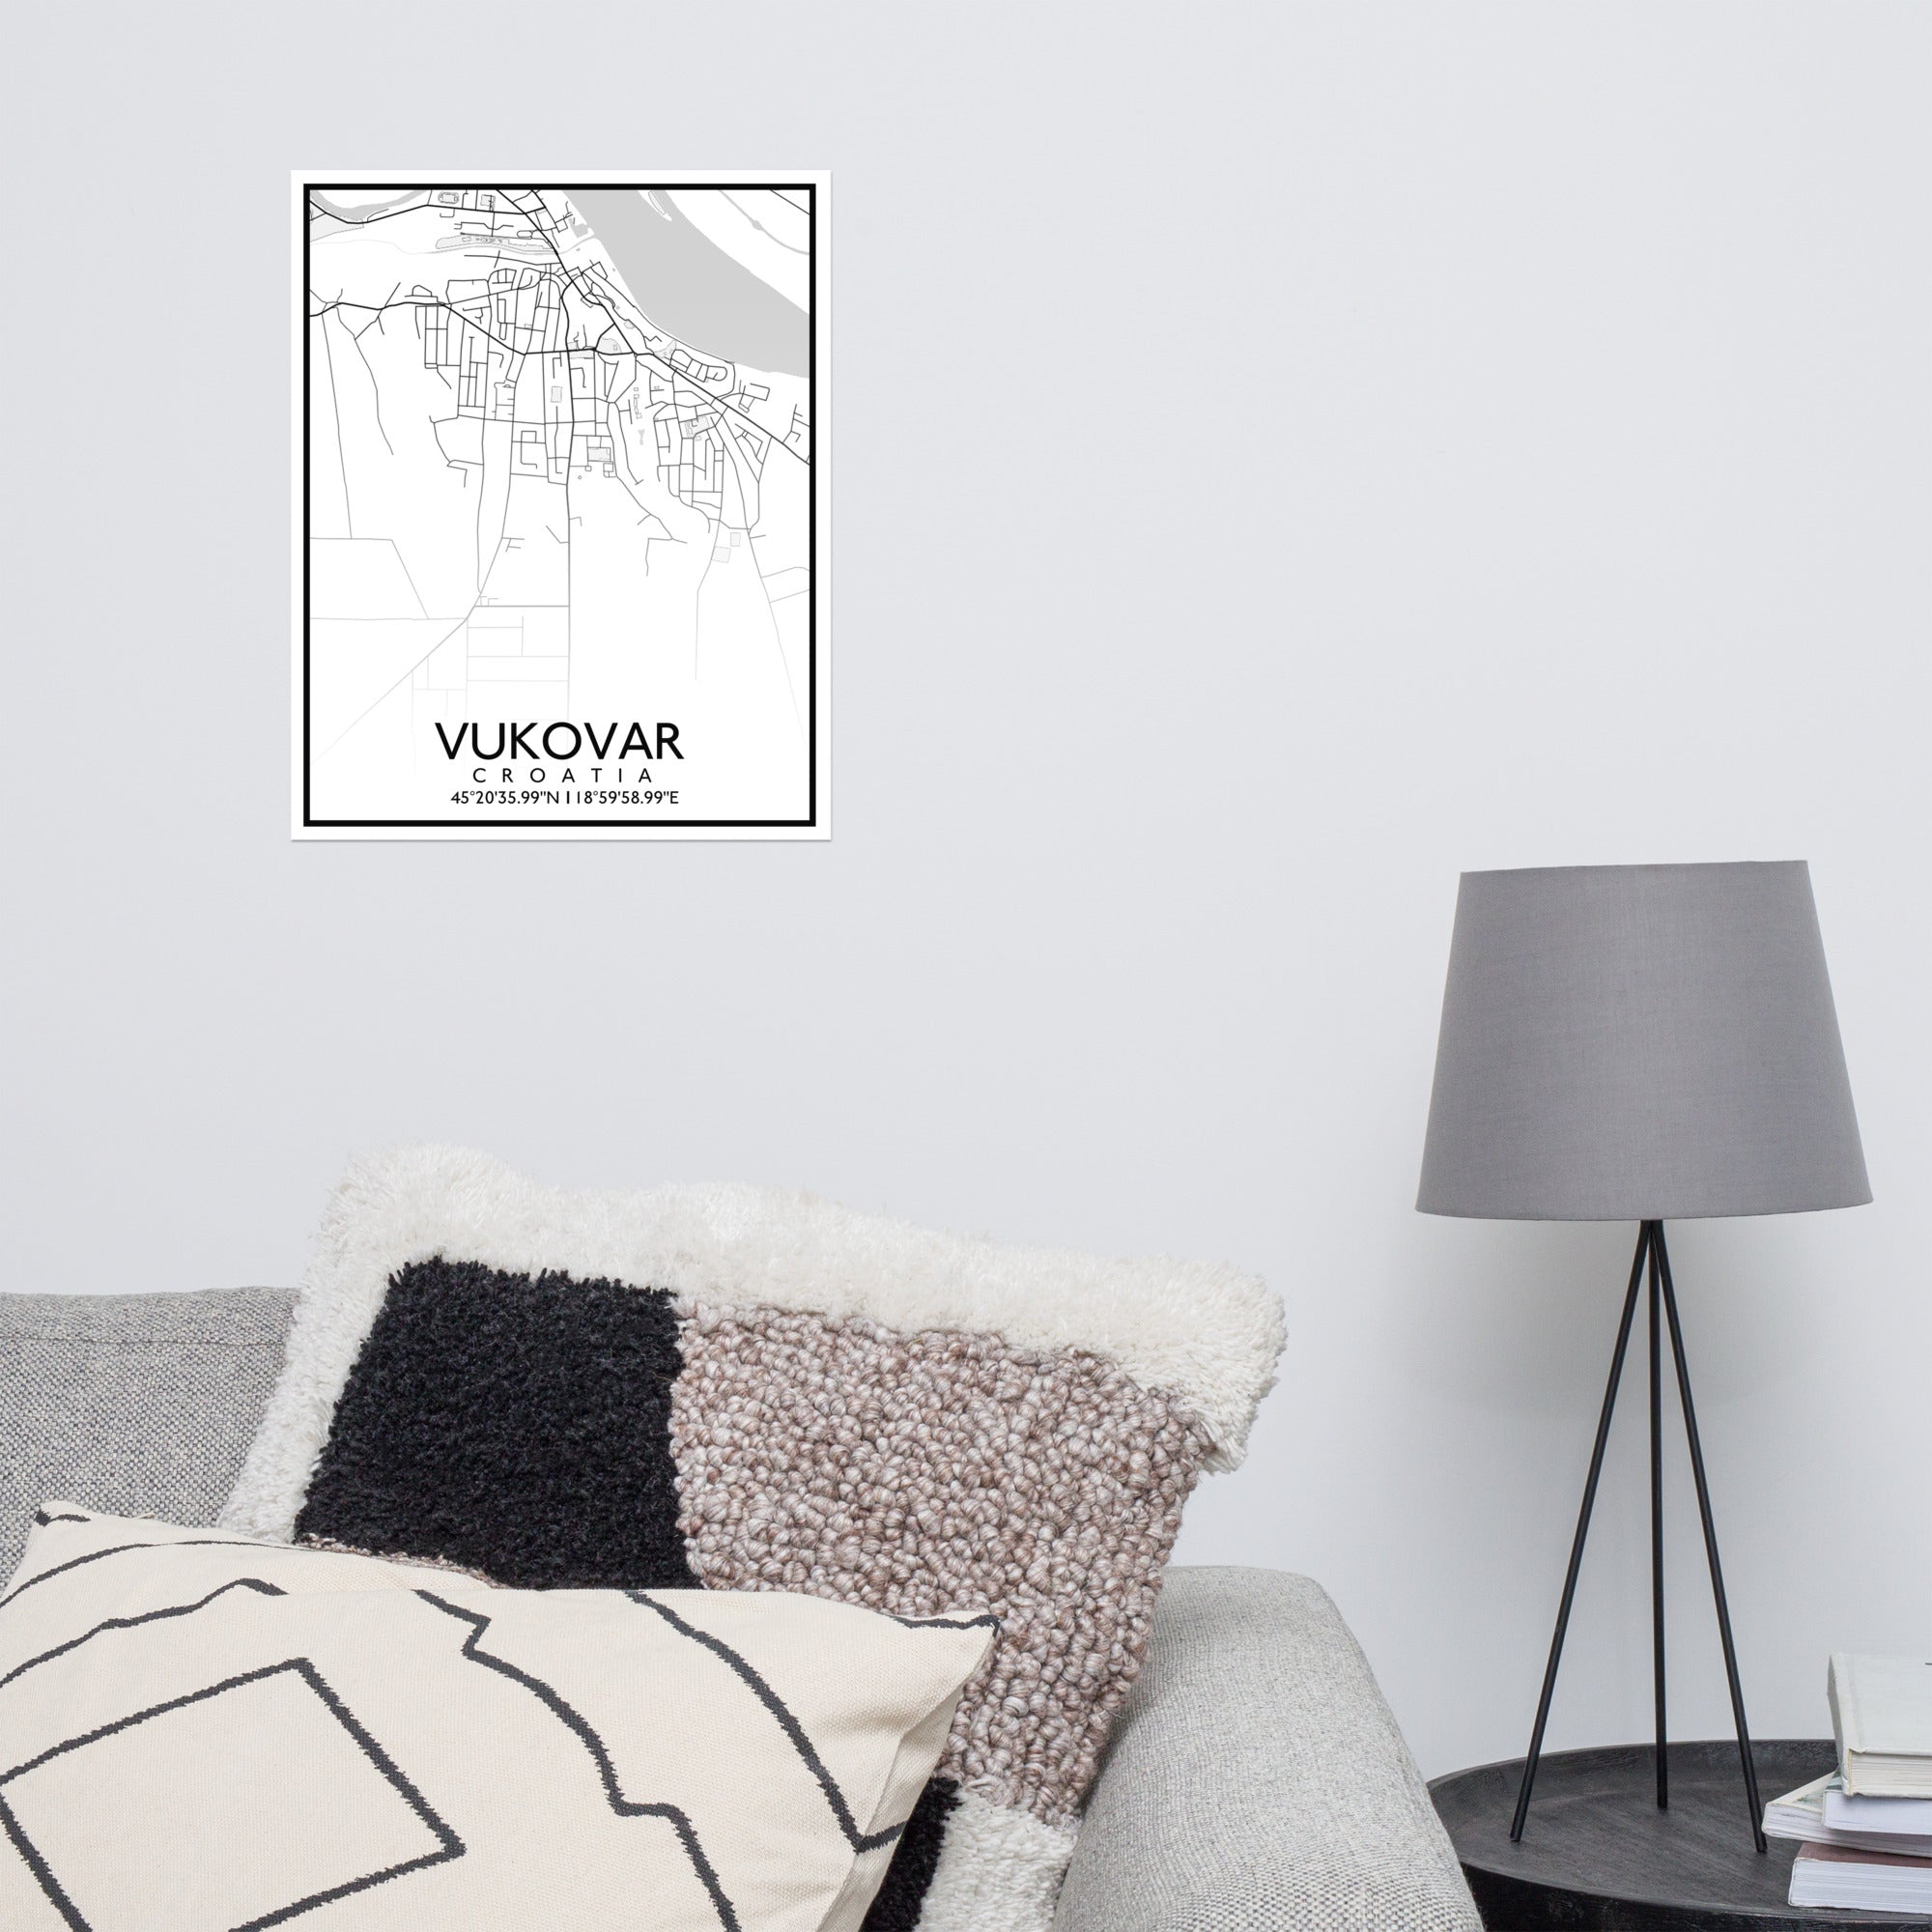 Vukovar - White City Map Matte Poster